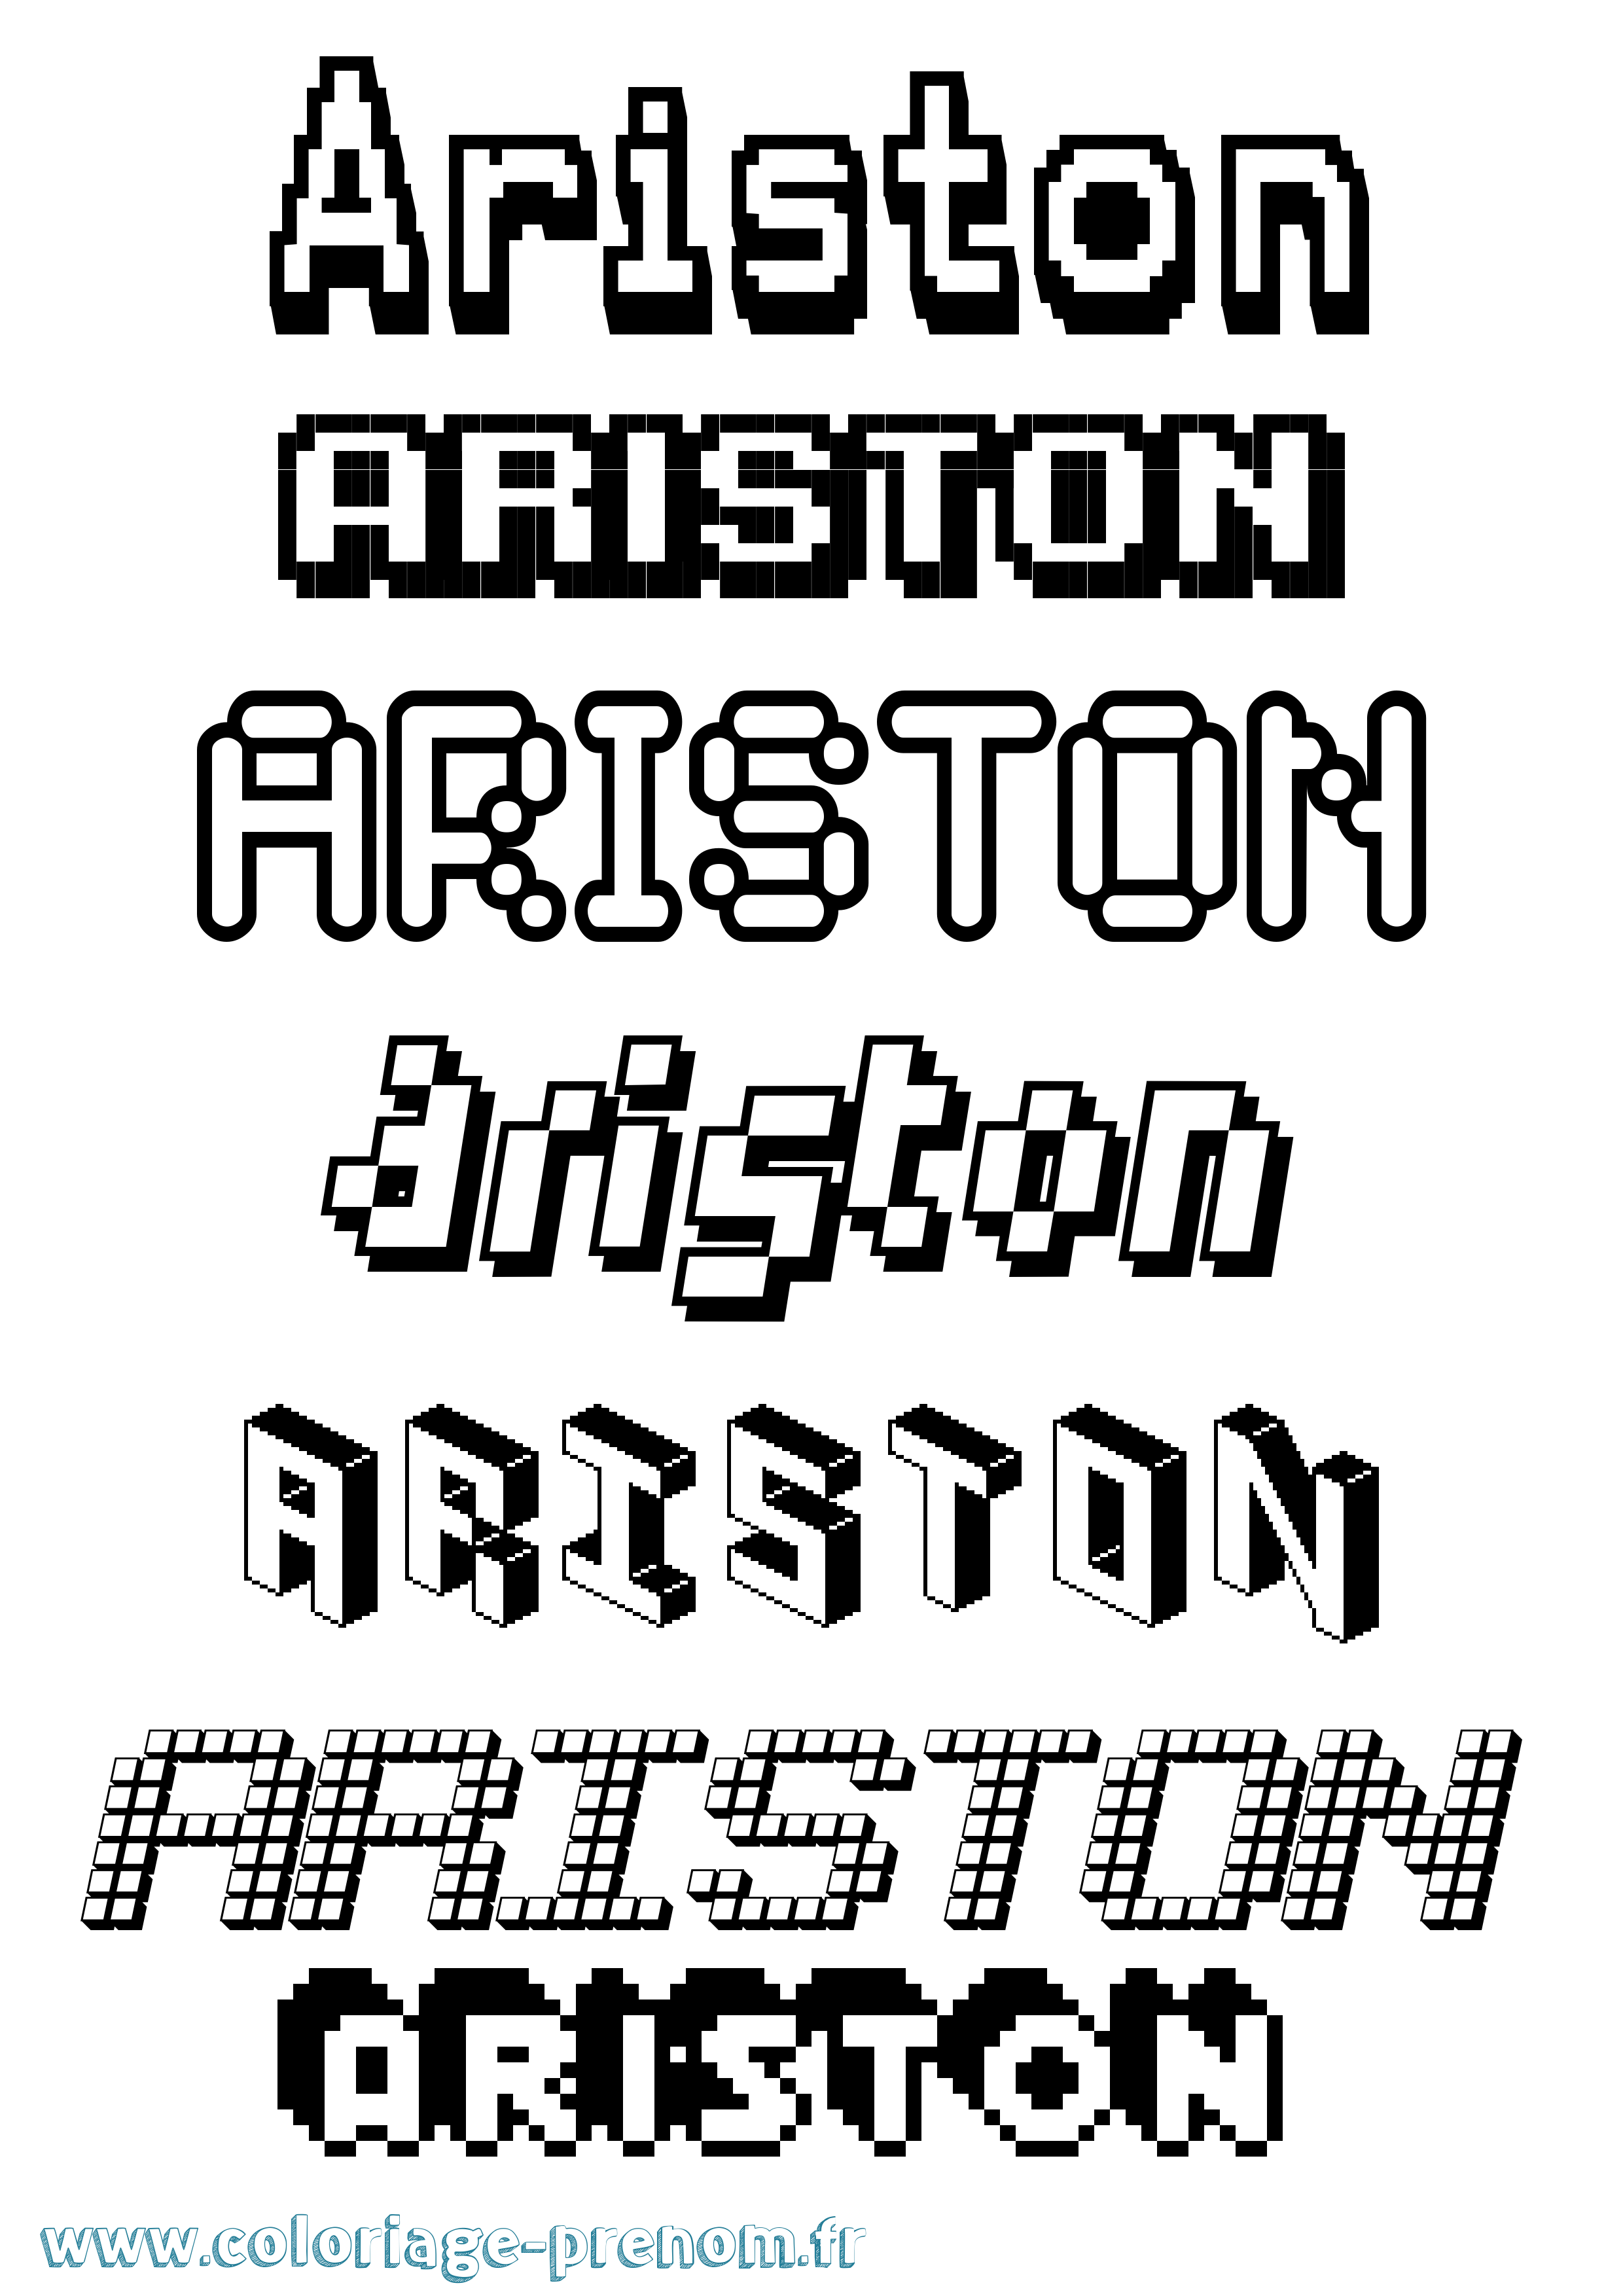 Coloriage prénom Ariston Pixel